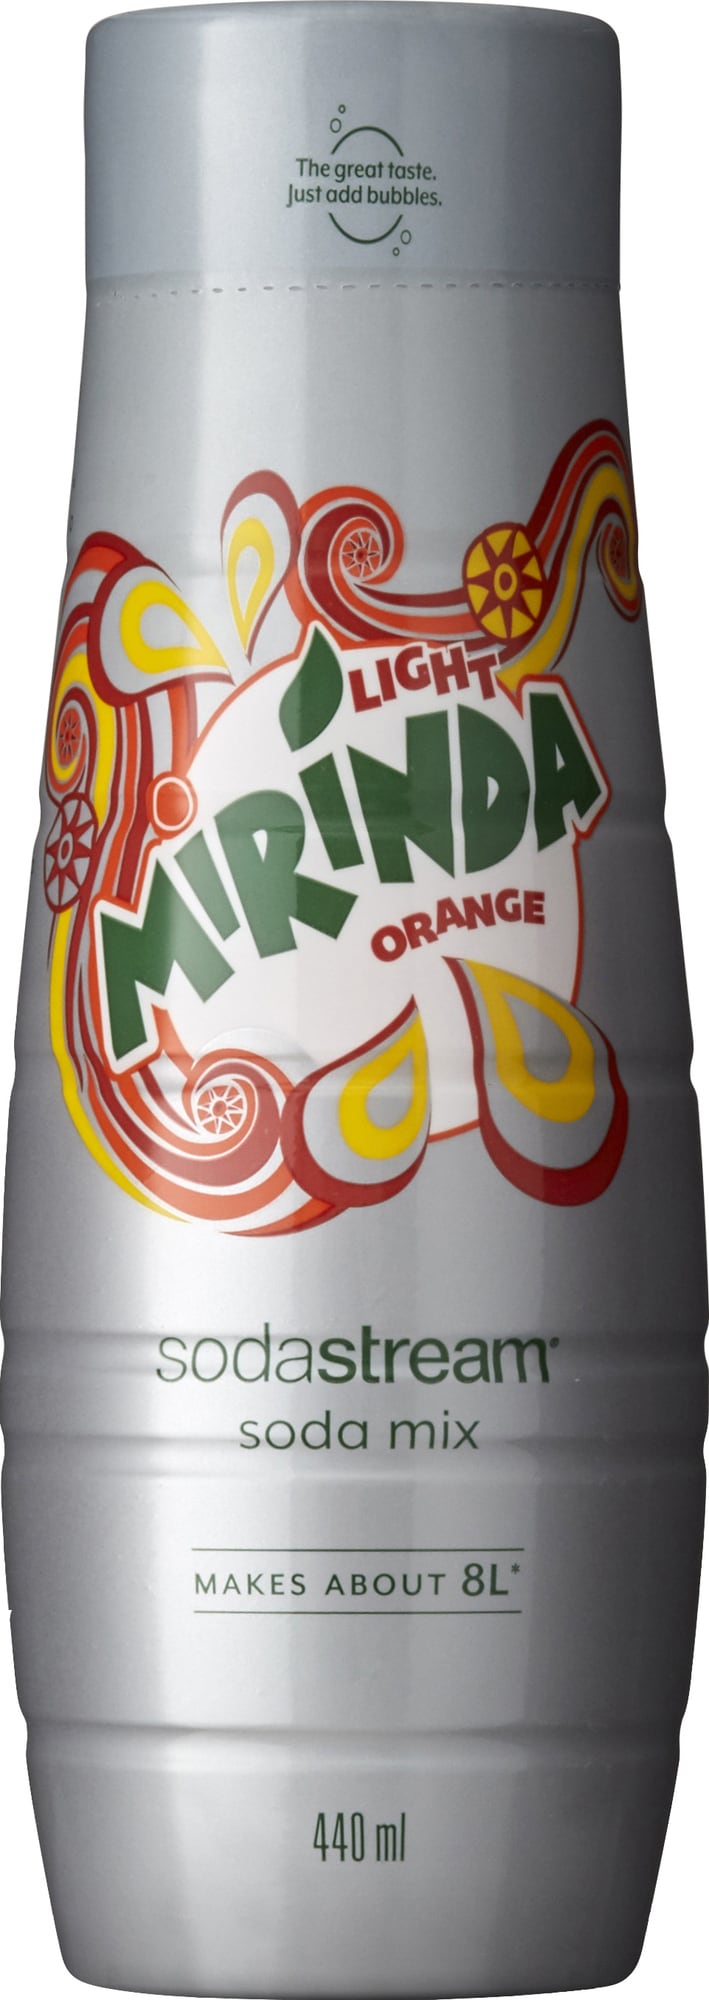 Sodastream Mirinda Orange Light smag 1100010770 thumbnail